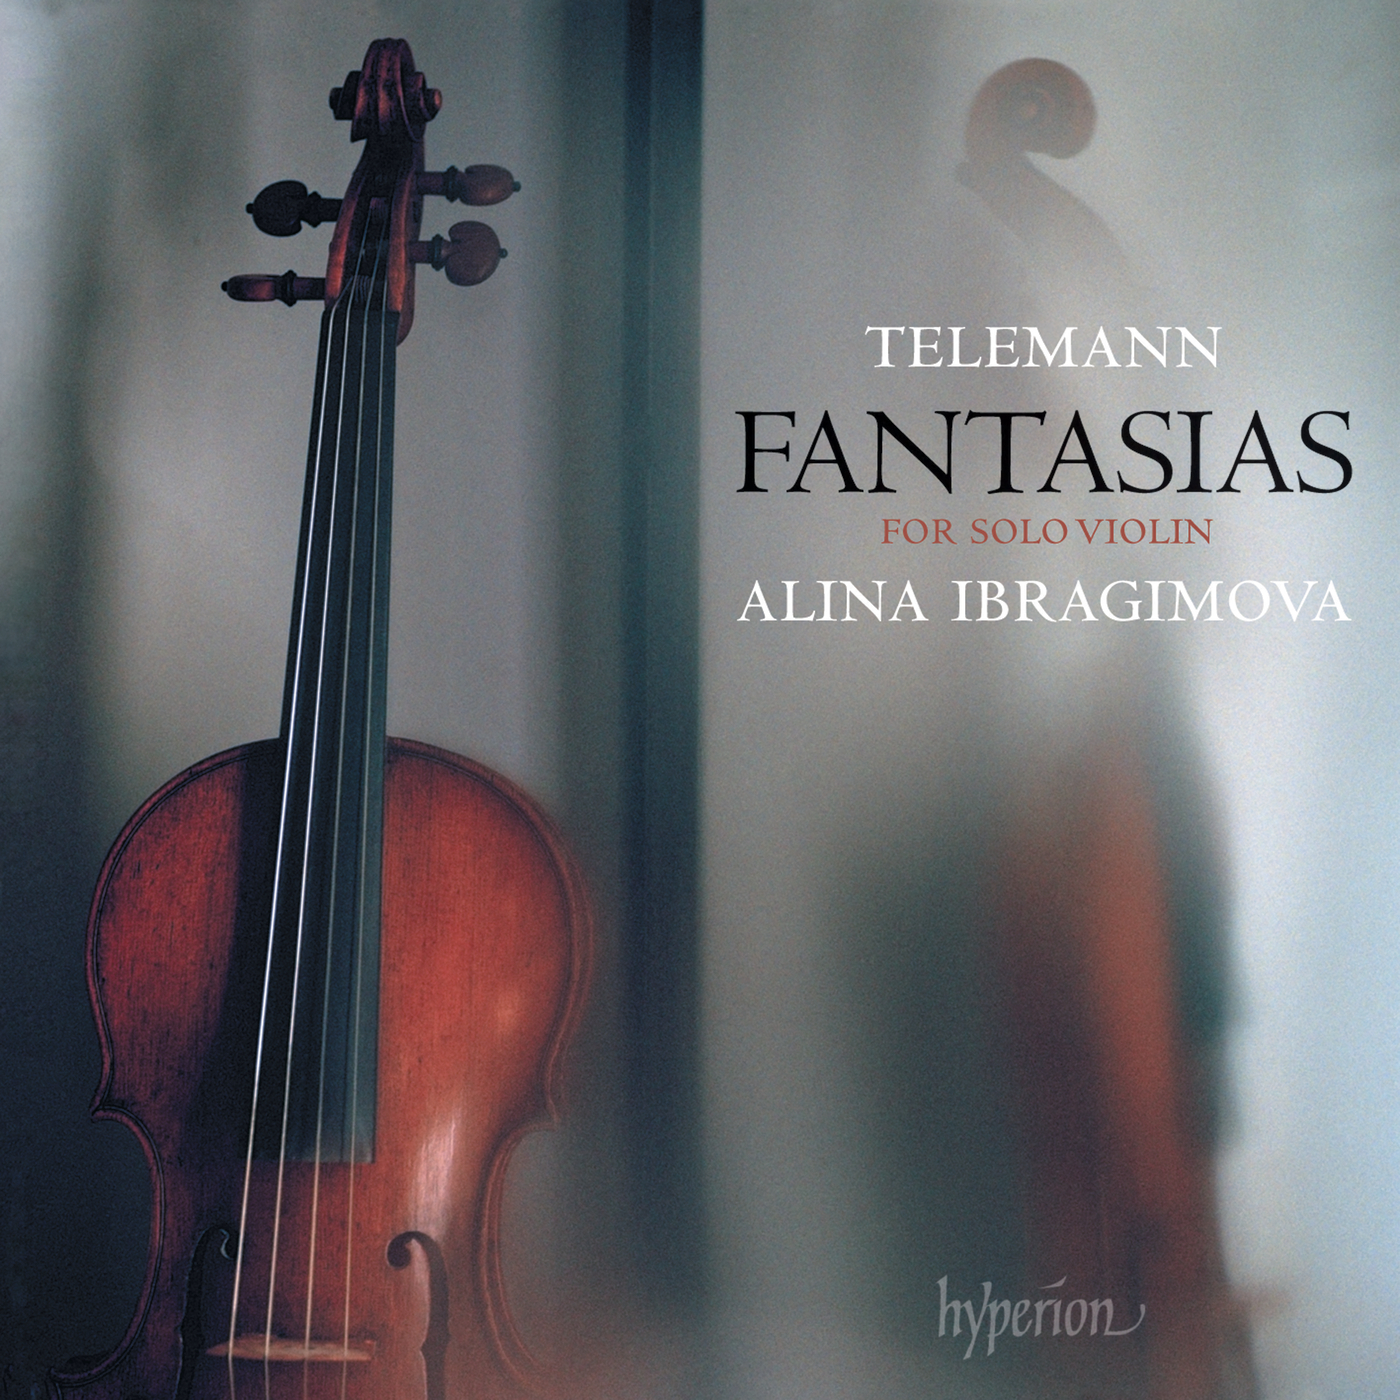 Telemann - Fantasias for Solo Violin - Alina Ibragimova